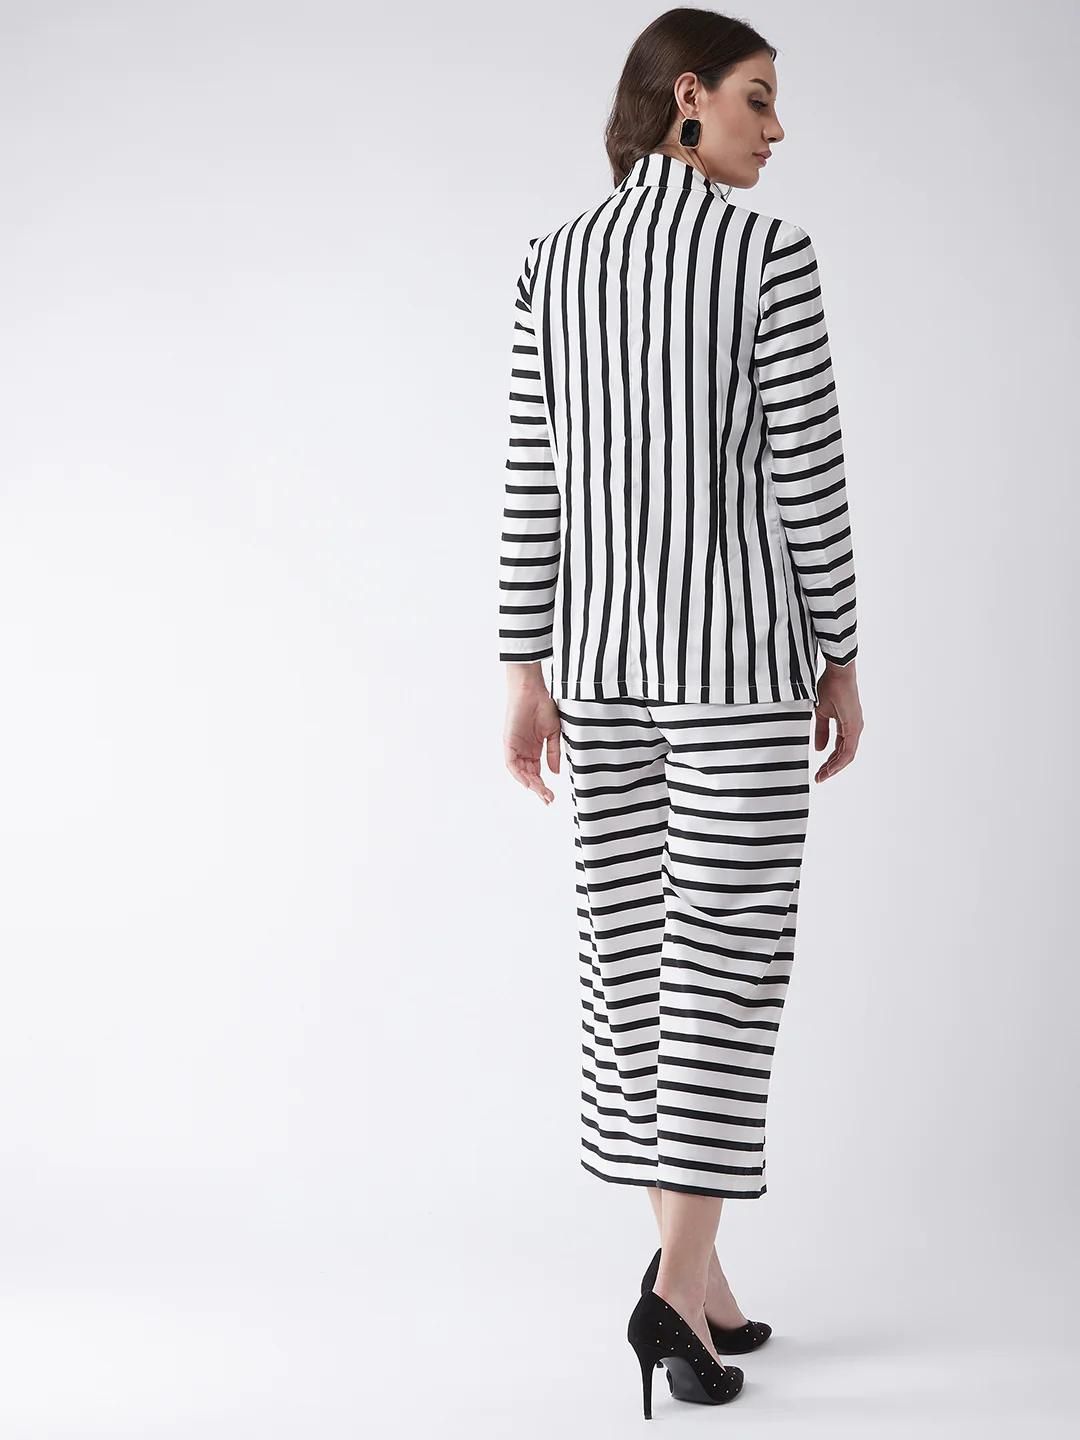 PANNKH Black & White Stripes Jumpsuit With Blazer